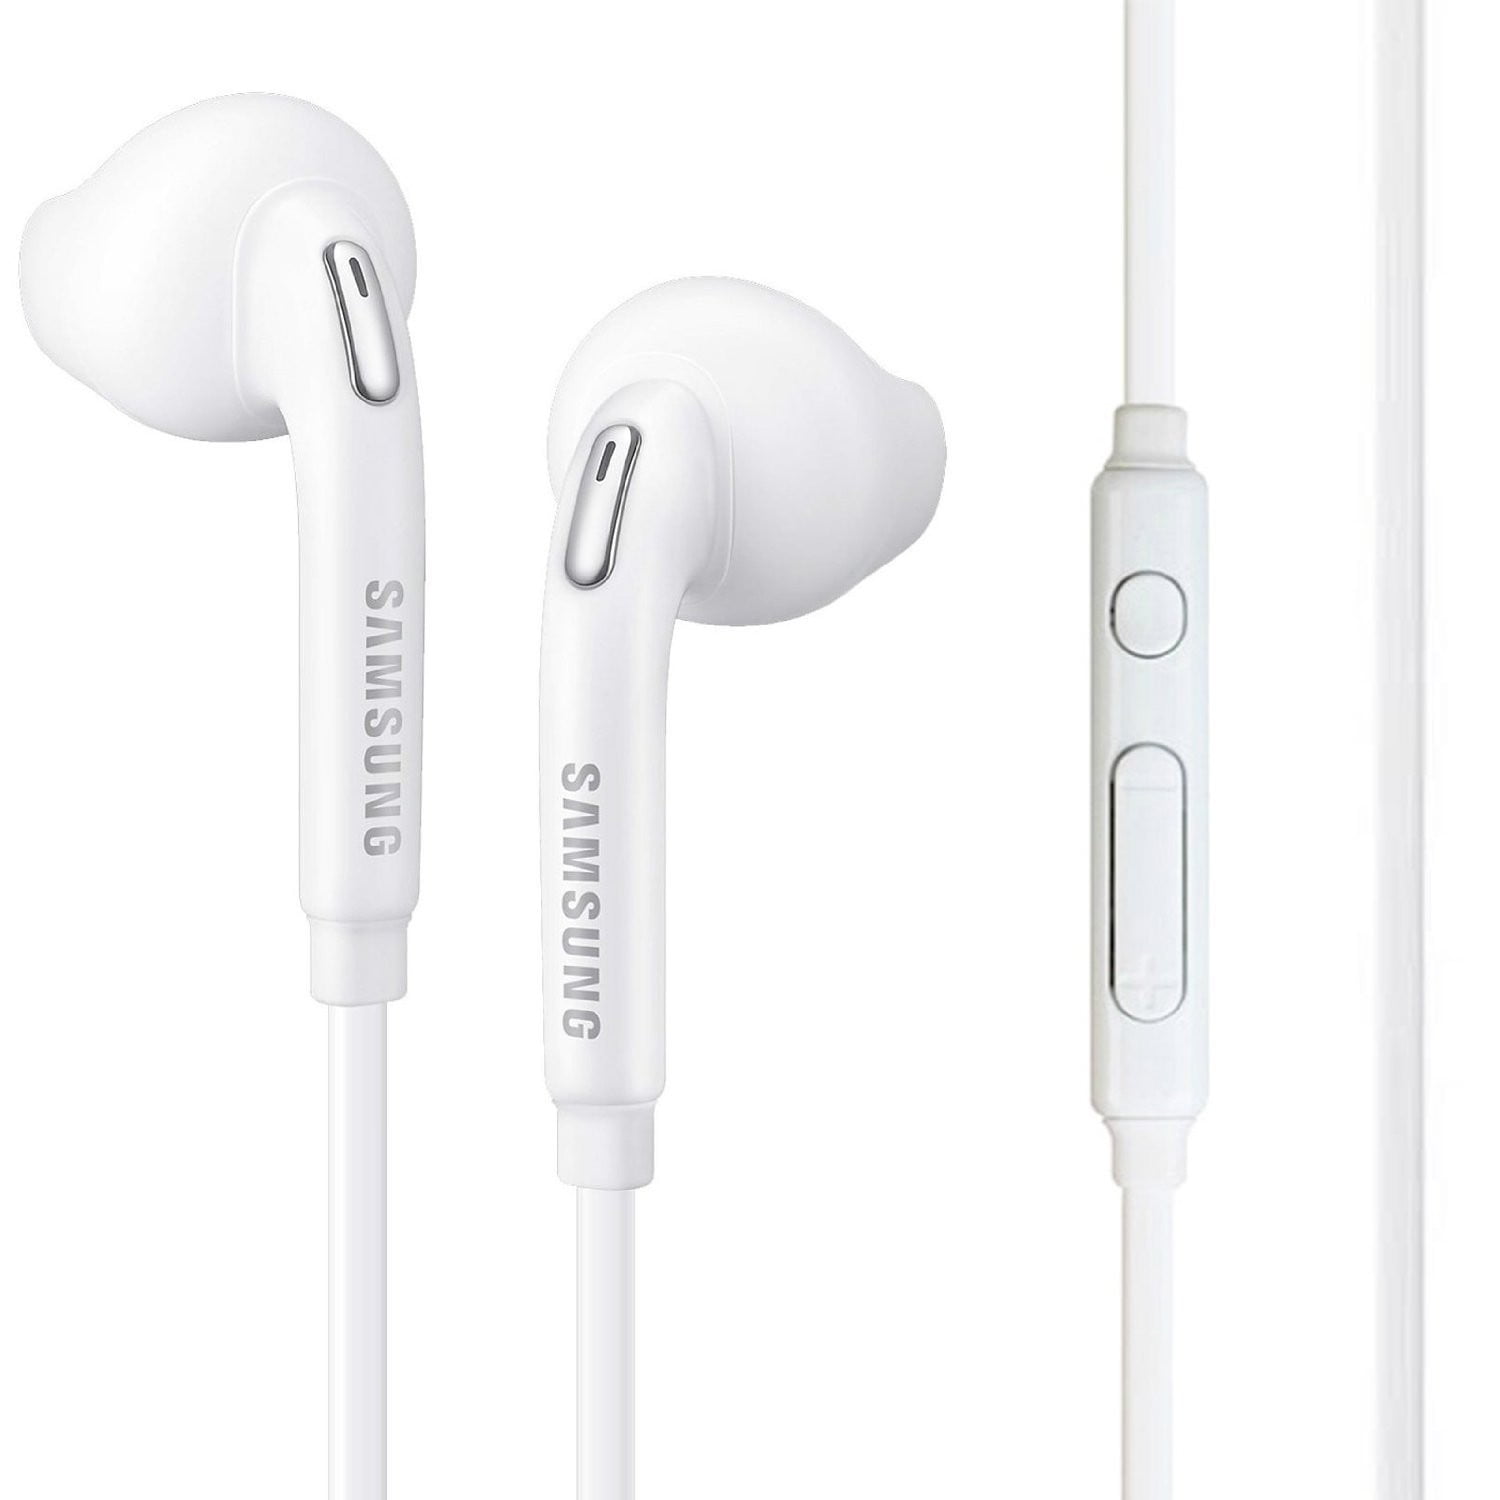 S8,S8+ GENUINE SAMSUNG HEADPHONES EARPHONES HEADSET FOR GALAXY S7 EDGE,S7 EDGE+ 